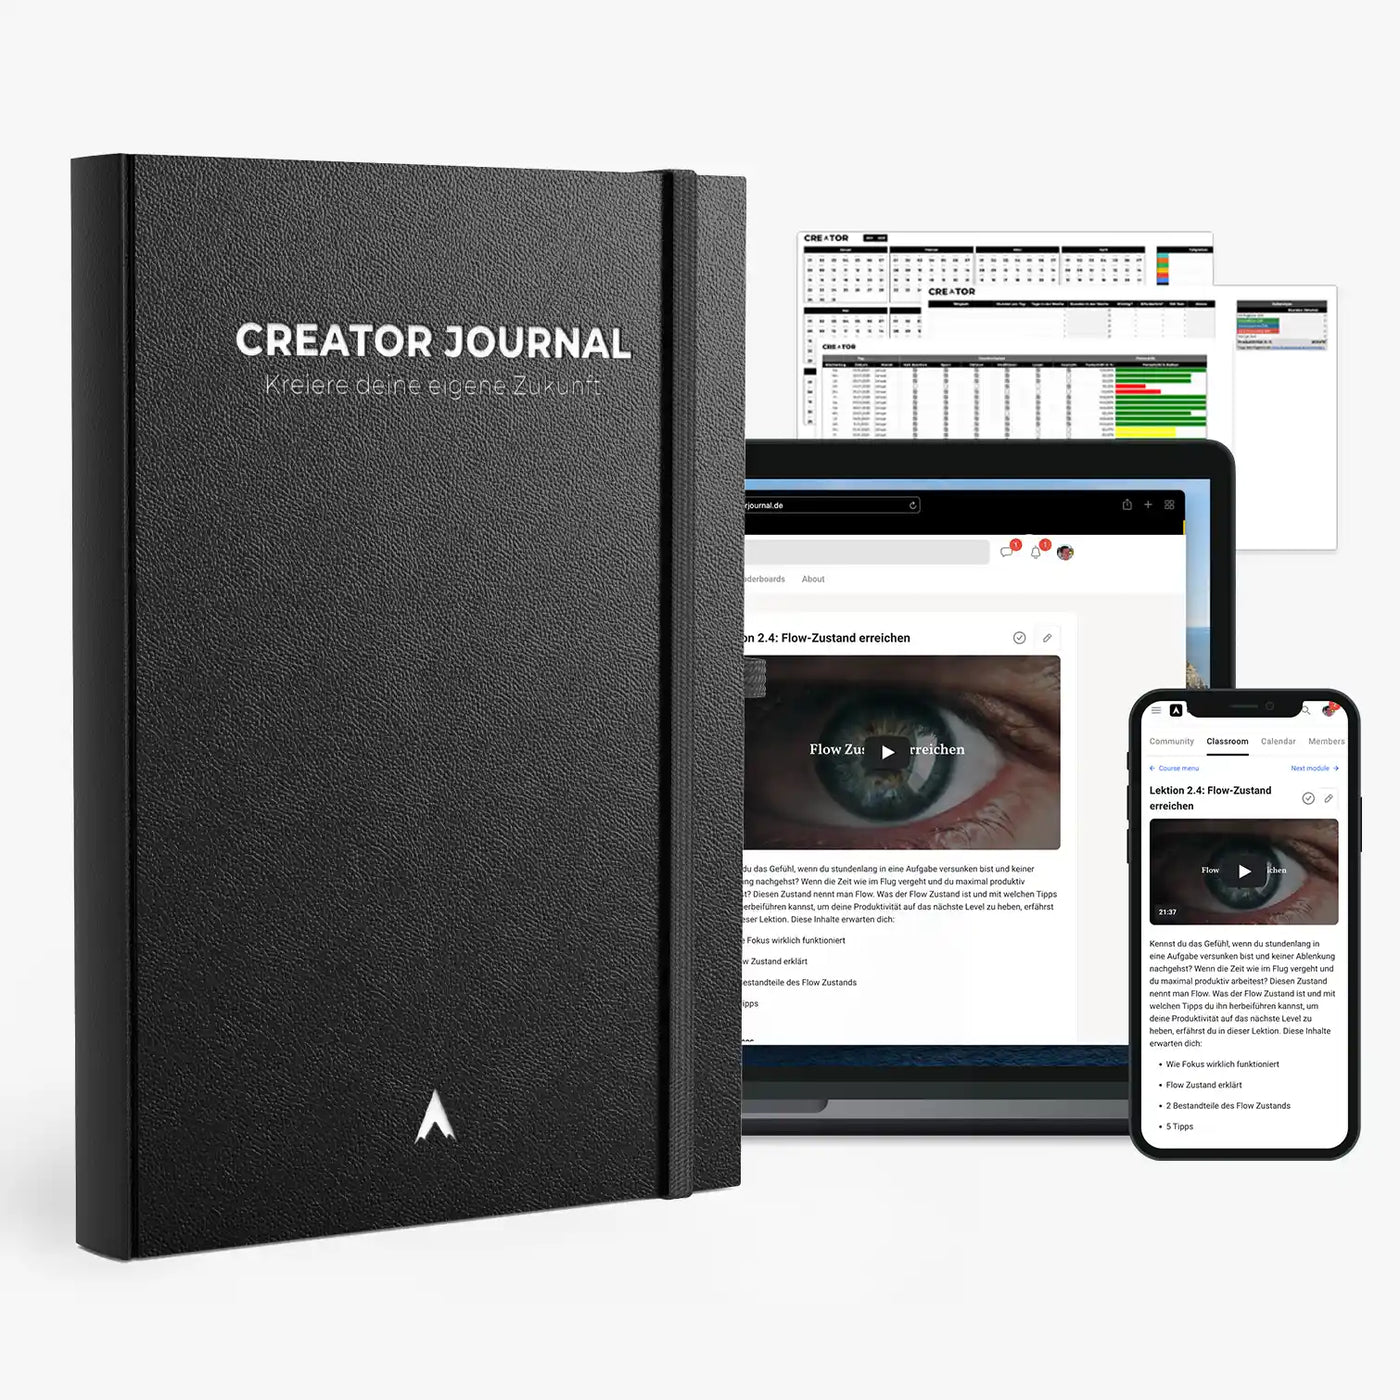 Creator Journal Angebot